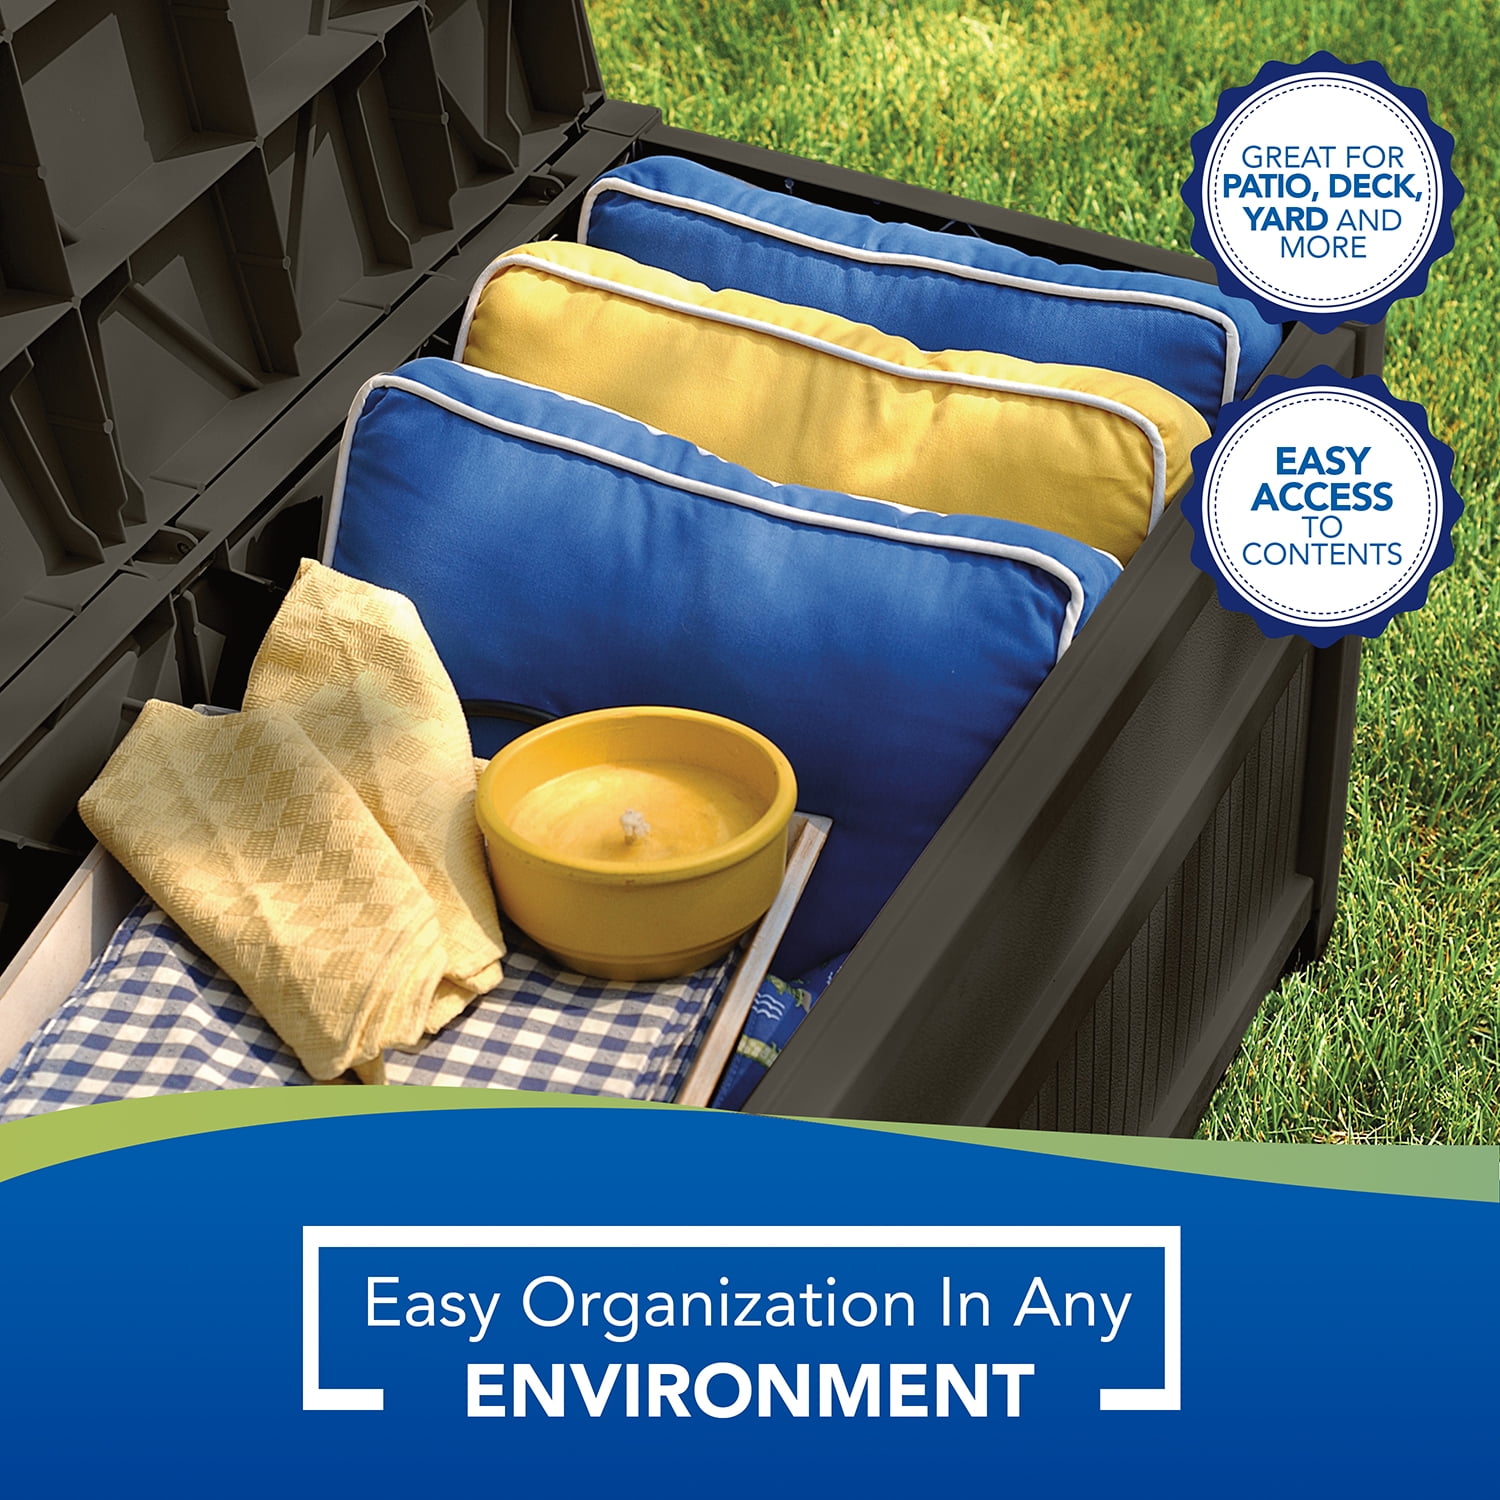 Suncast 50-Gallon Outdoor Resin Patio Deck Storage Box with Seat,  Peppercorn